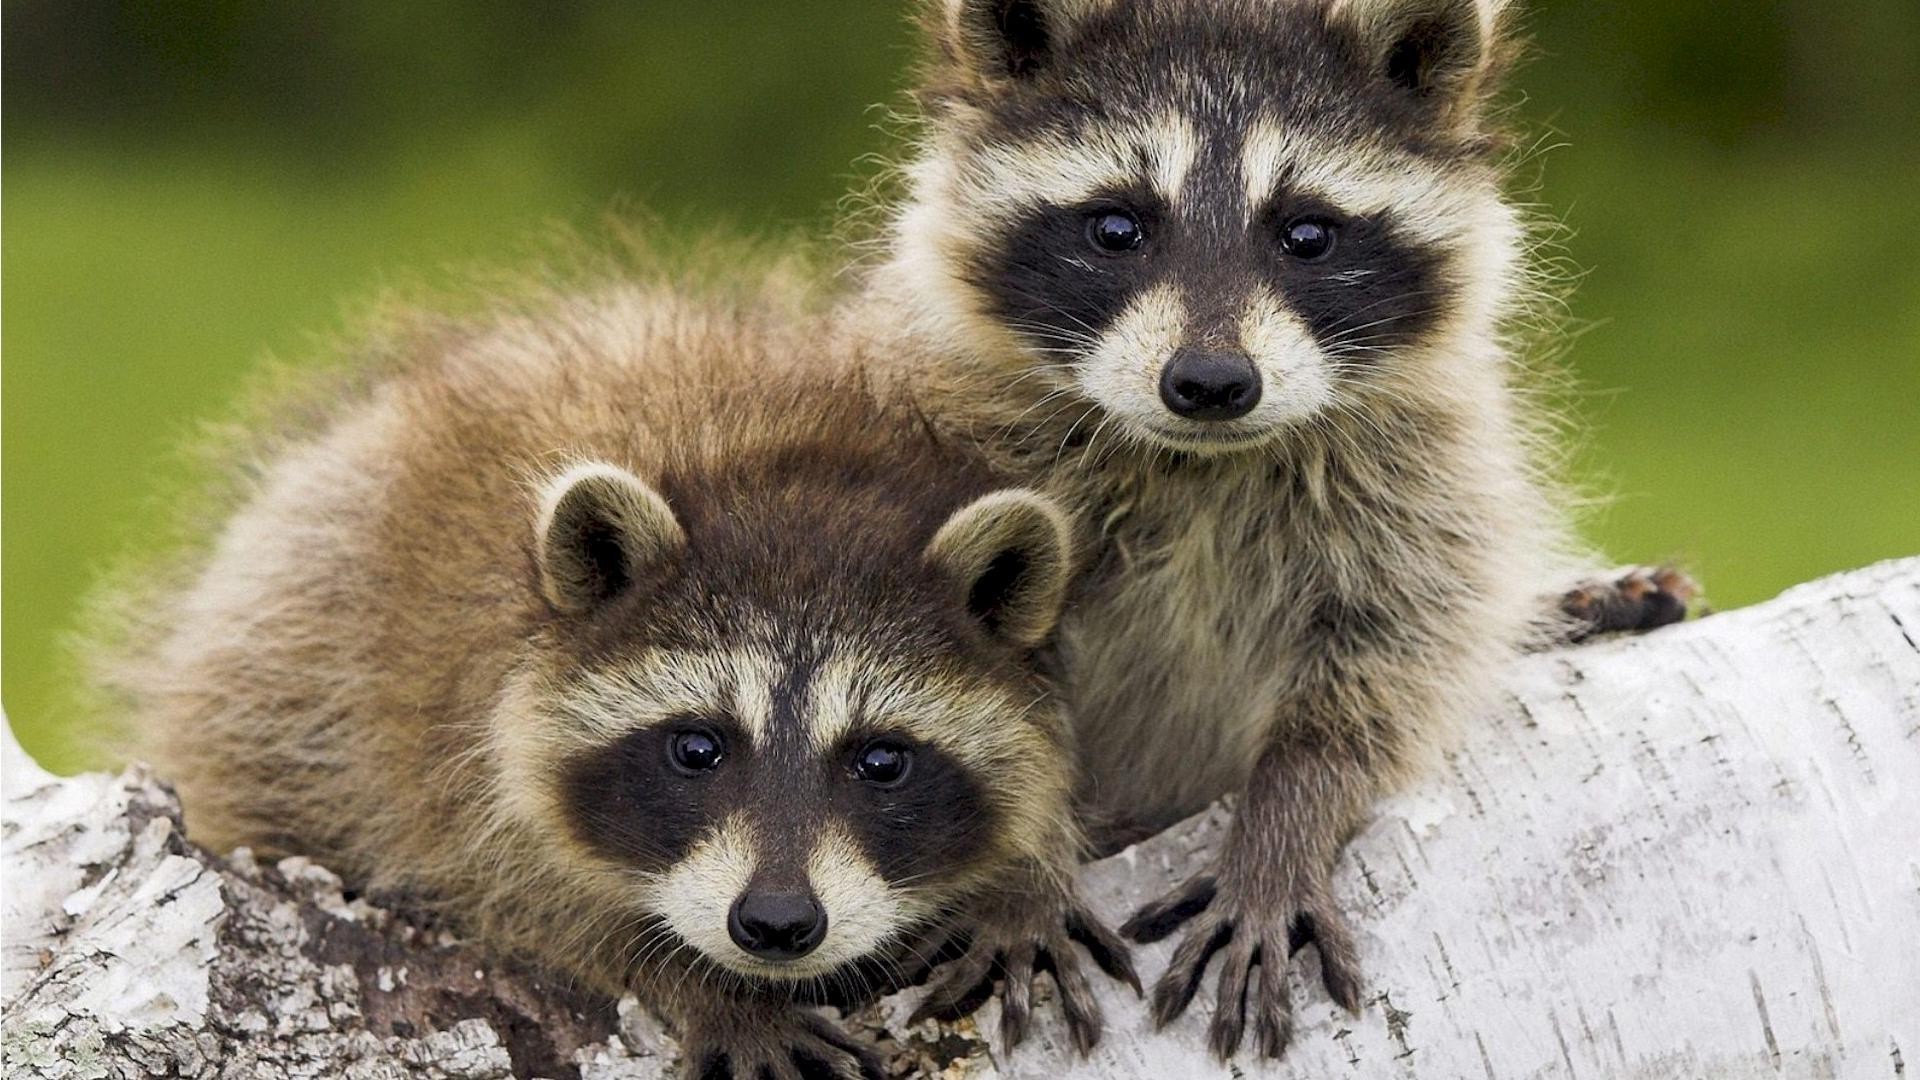 animals mammal wildlife cute animal nature fur little portrait wild raccoon furry looking eye young